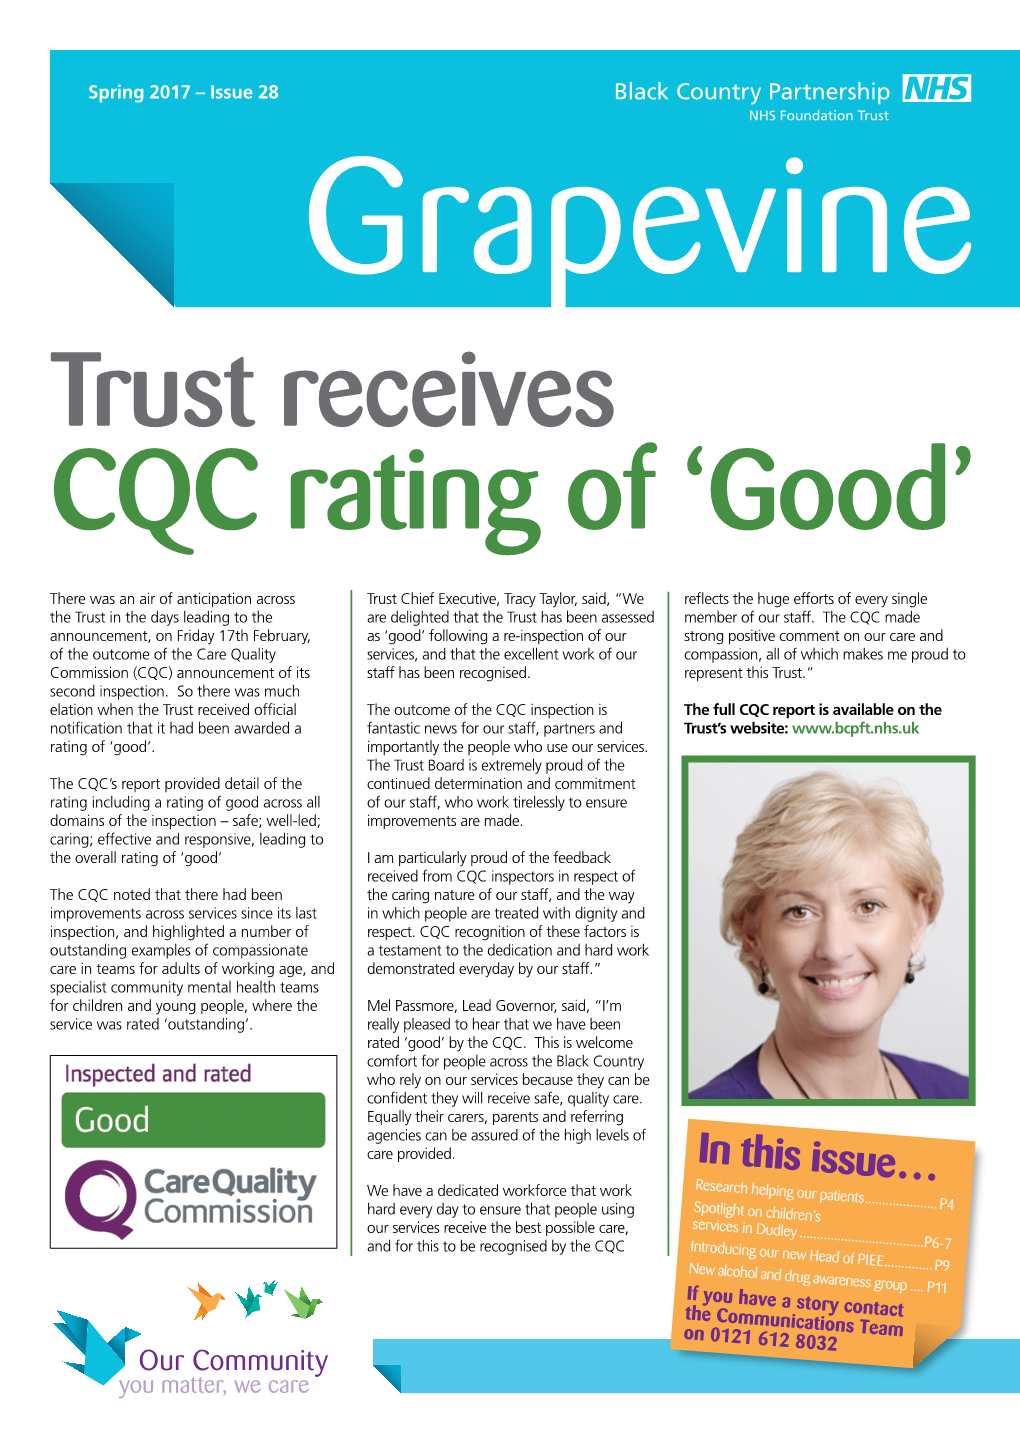 Trust Receives CQC Rating of ‘Good’